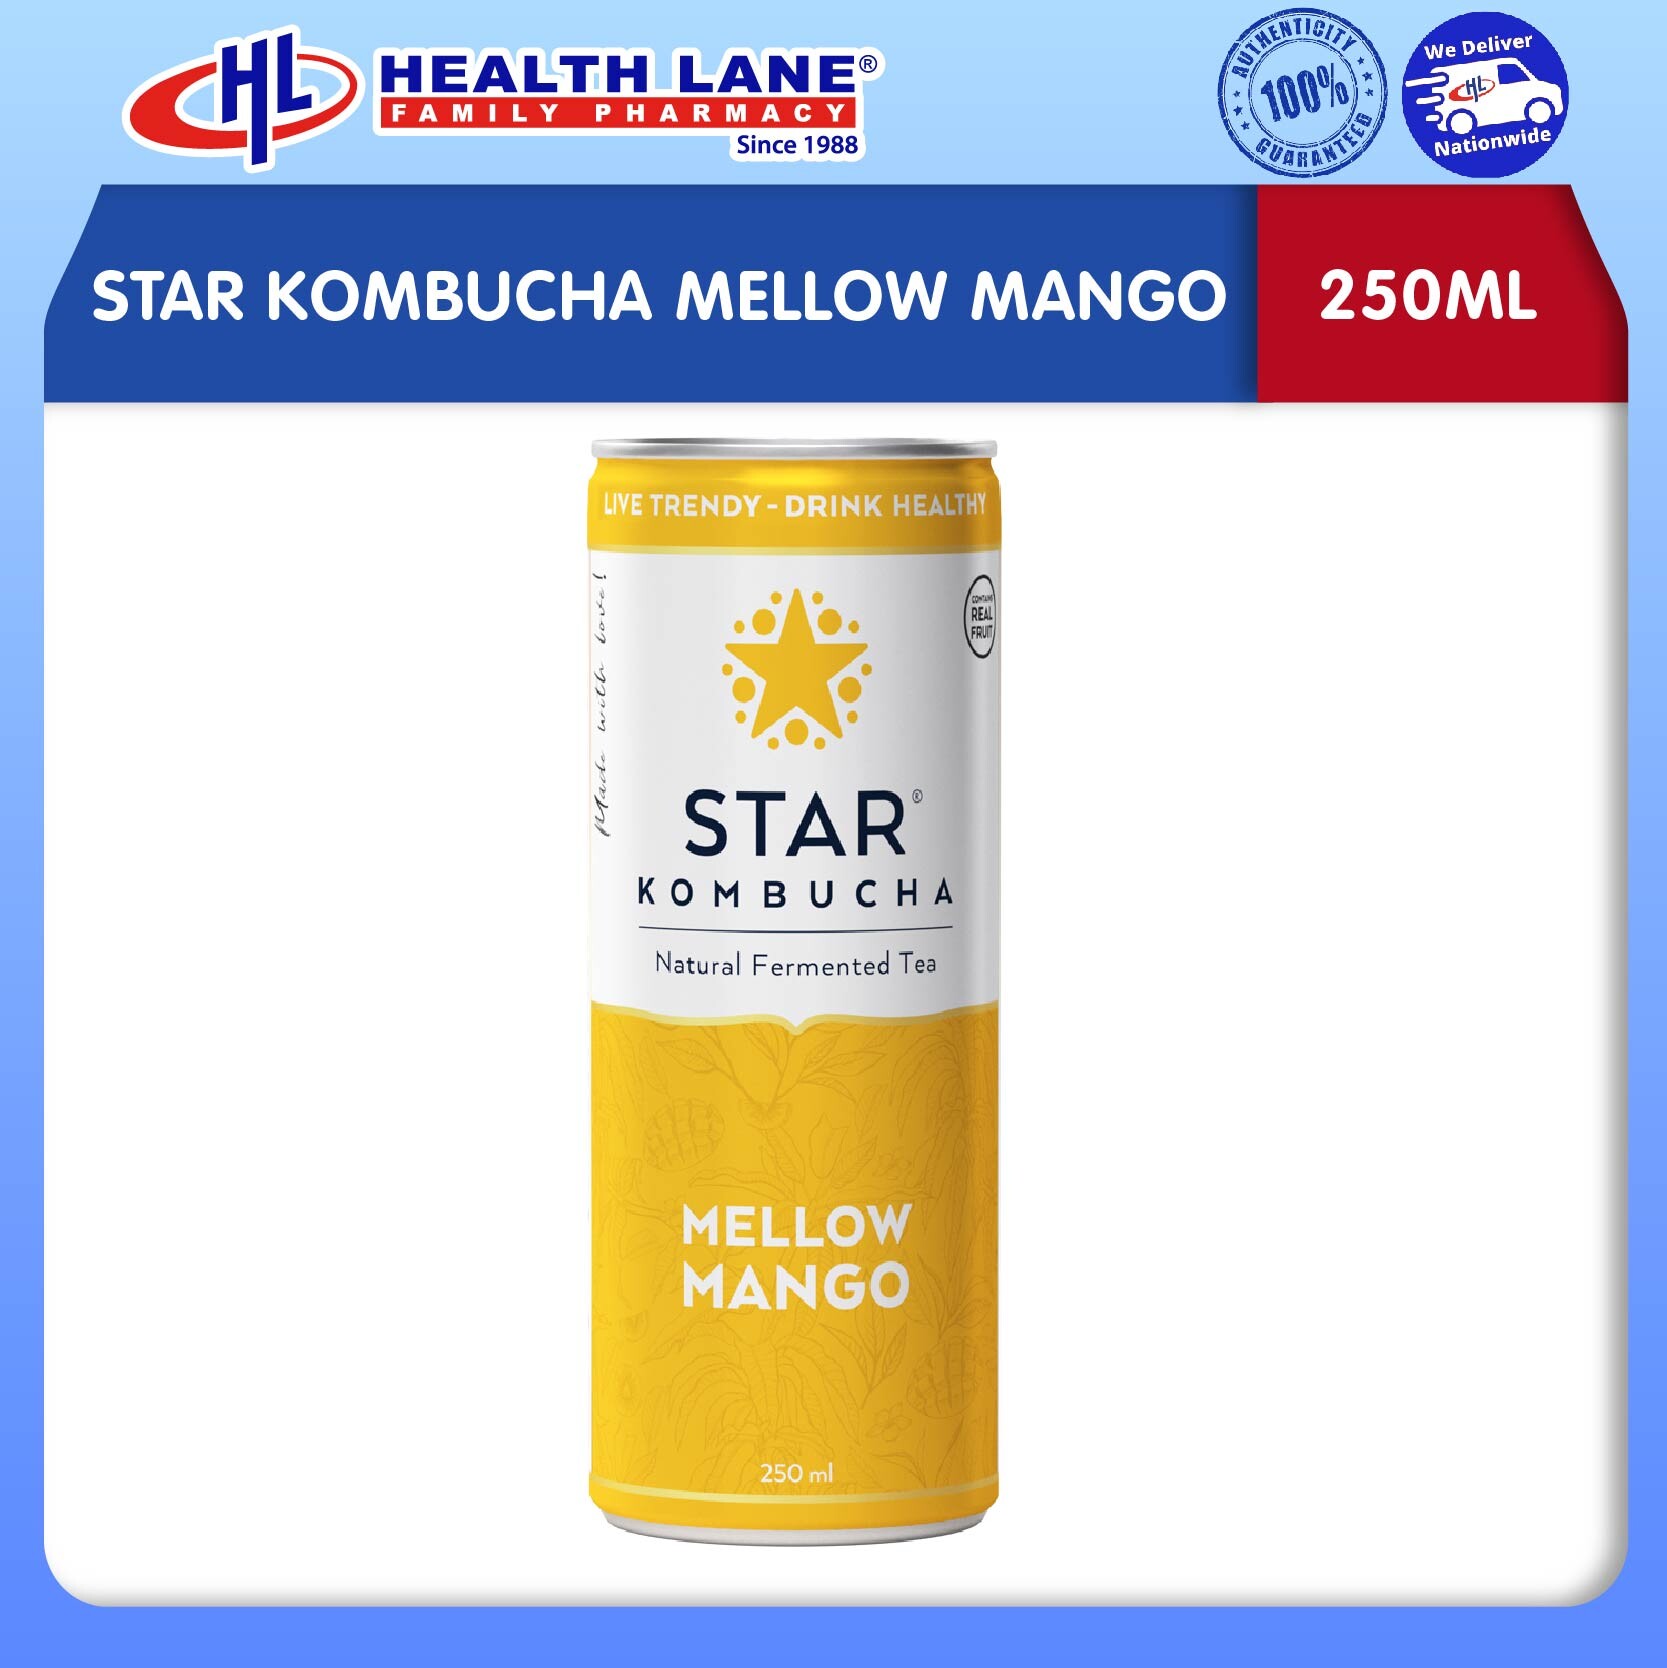 STAR KOMBUCHA MELLOW MANGO (250ML)